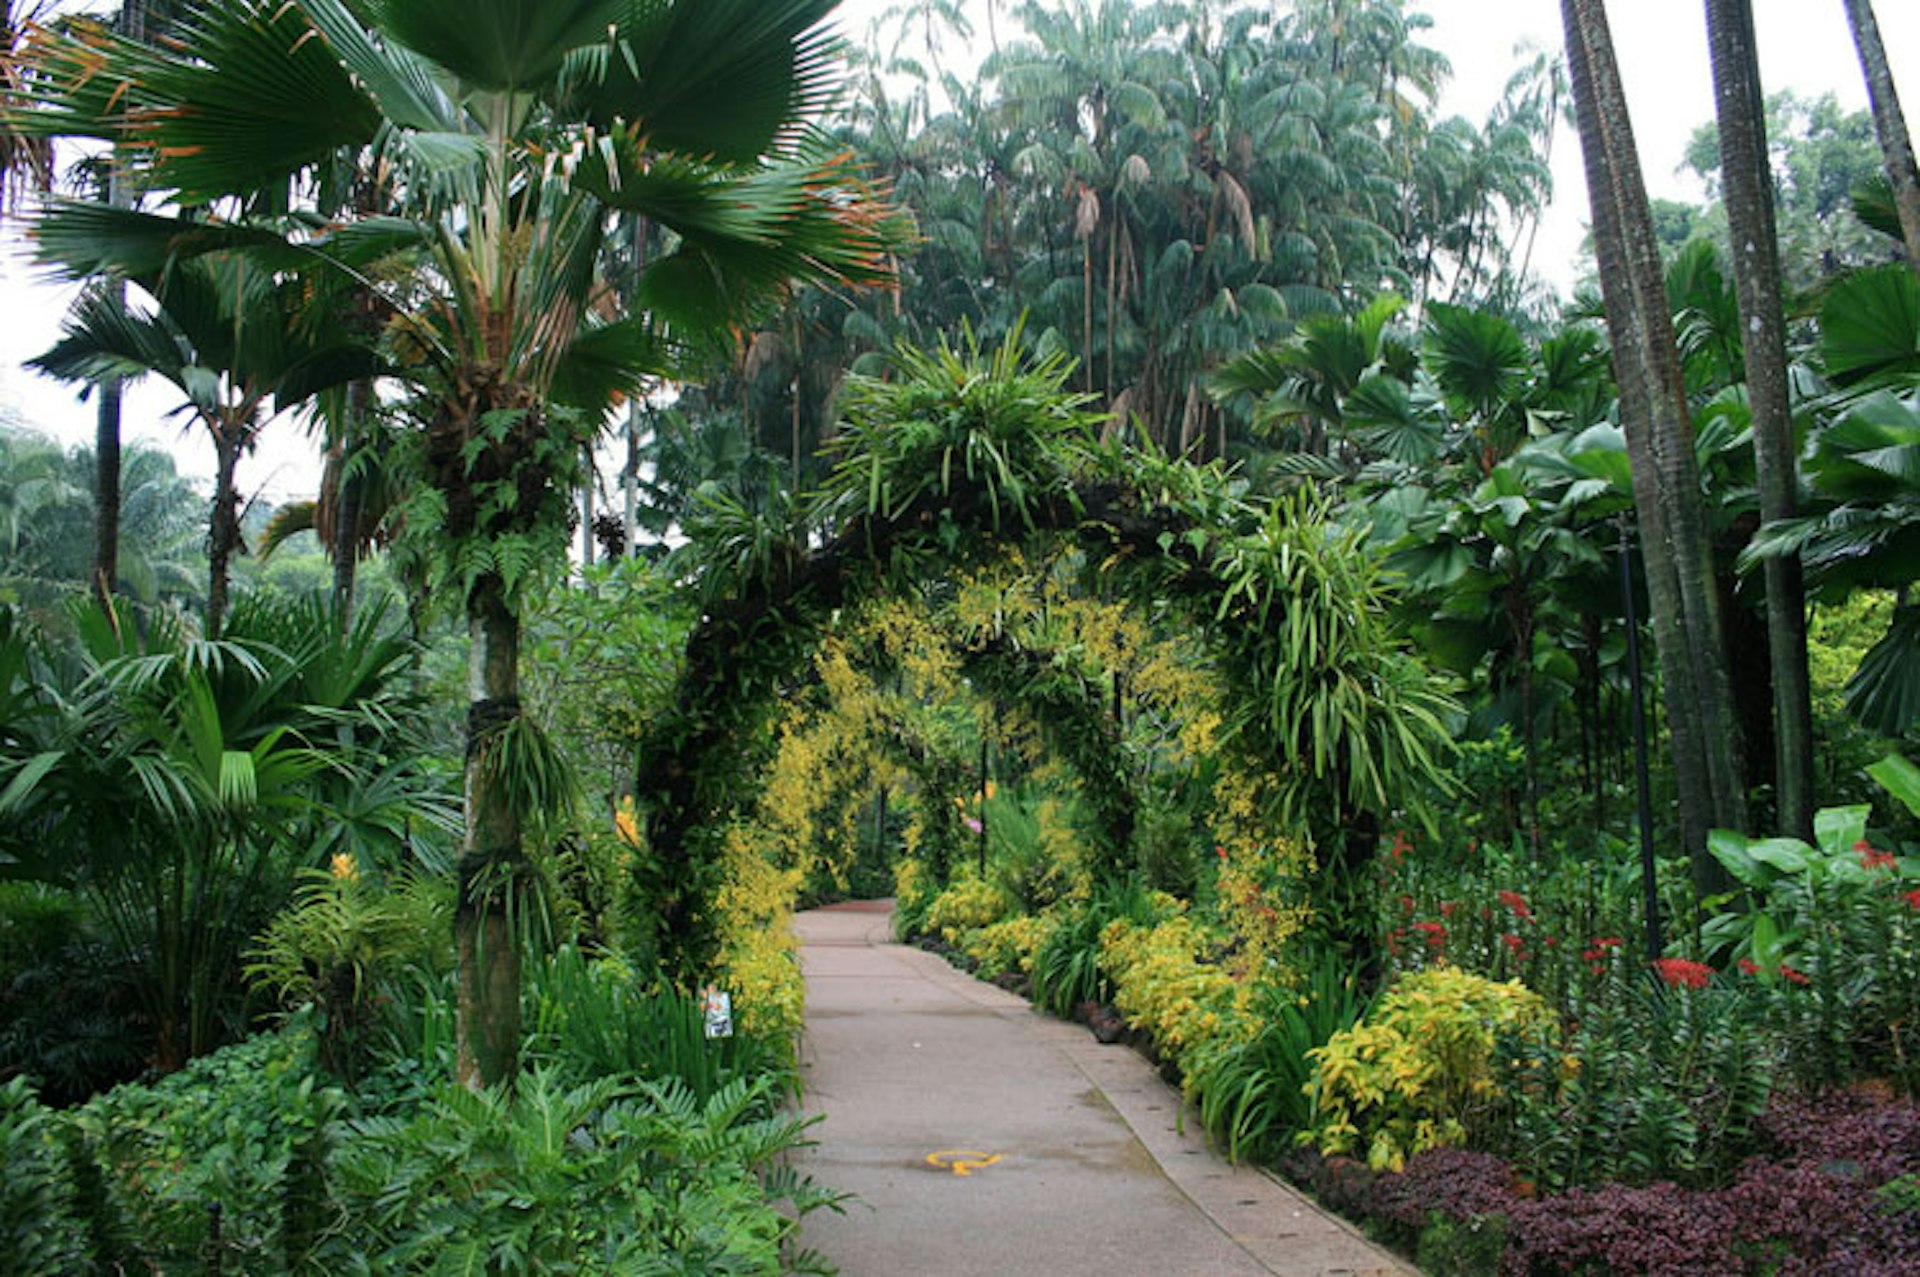 Singapore Botanic Gardens. Image by Joshua Eckert CC BY 2.0